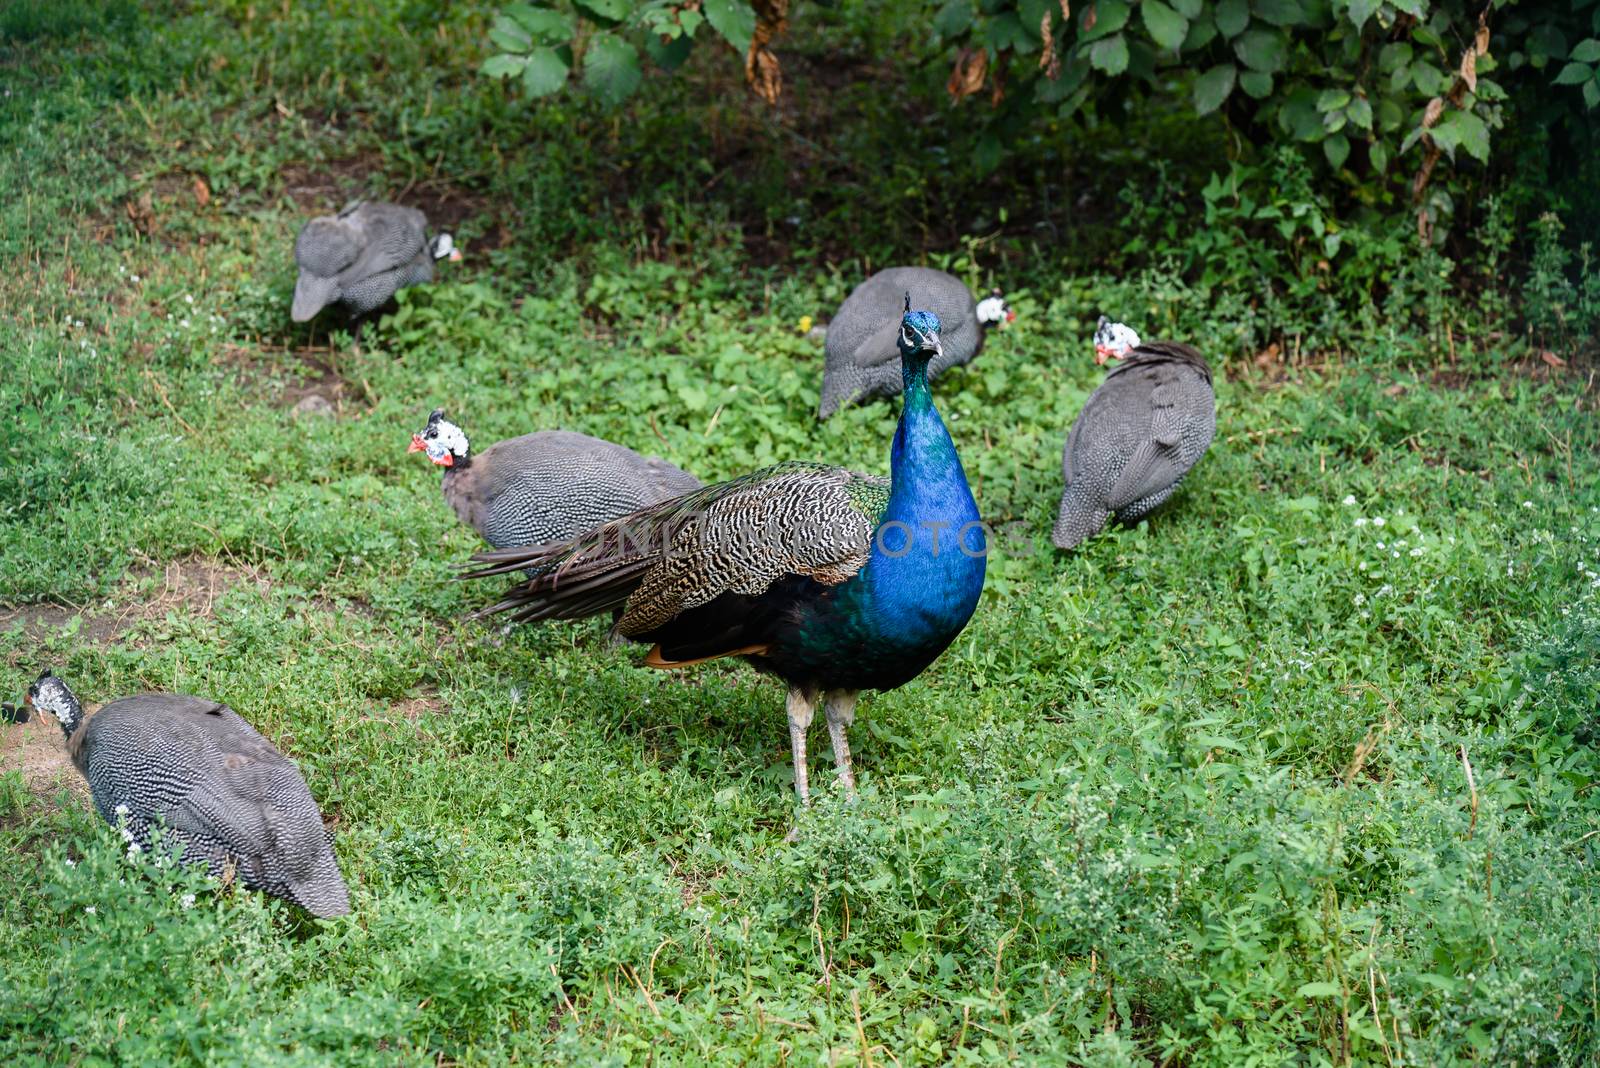 Male peacock and few pheasants by Seva_blsv